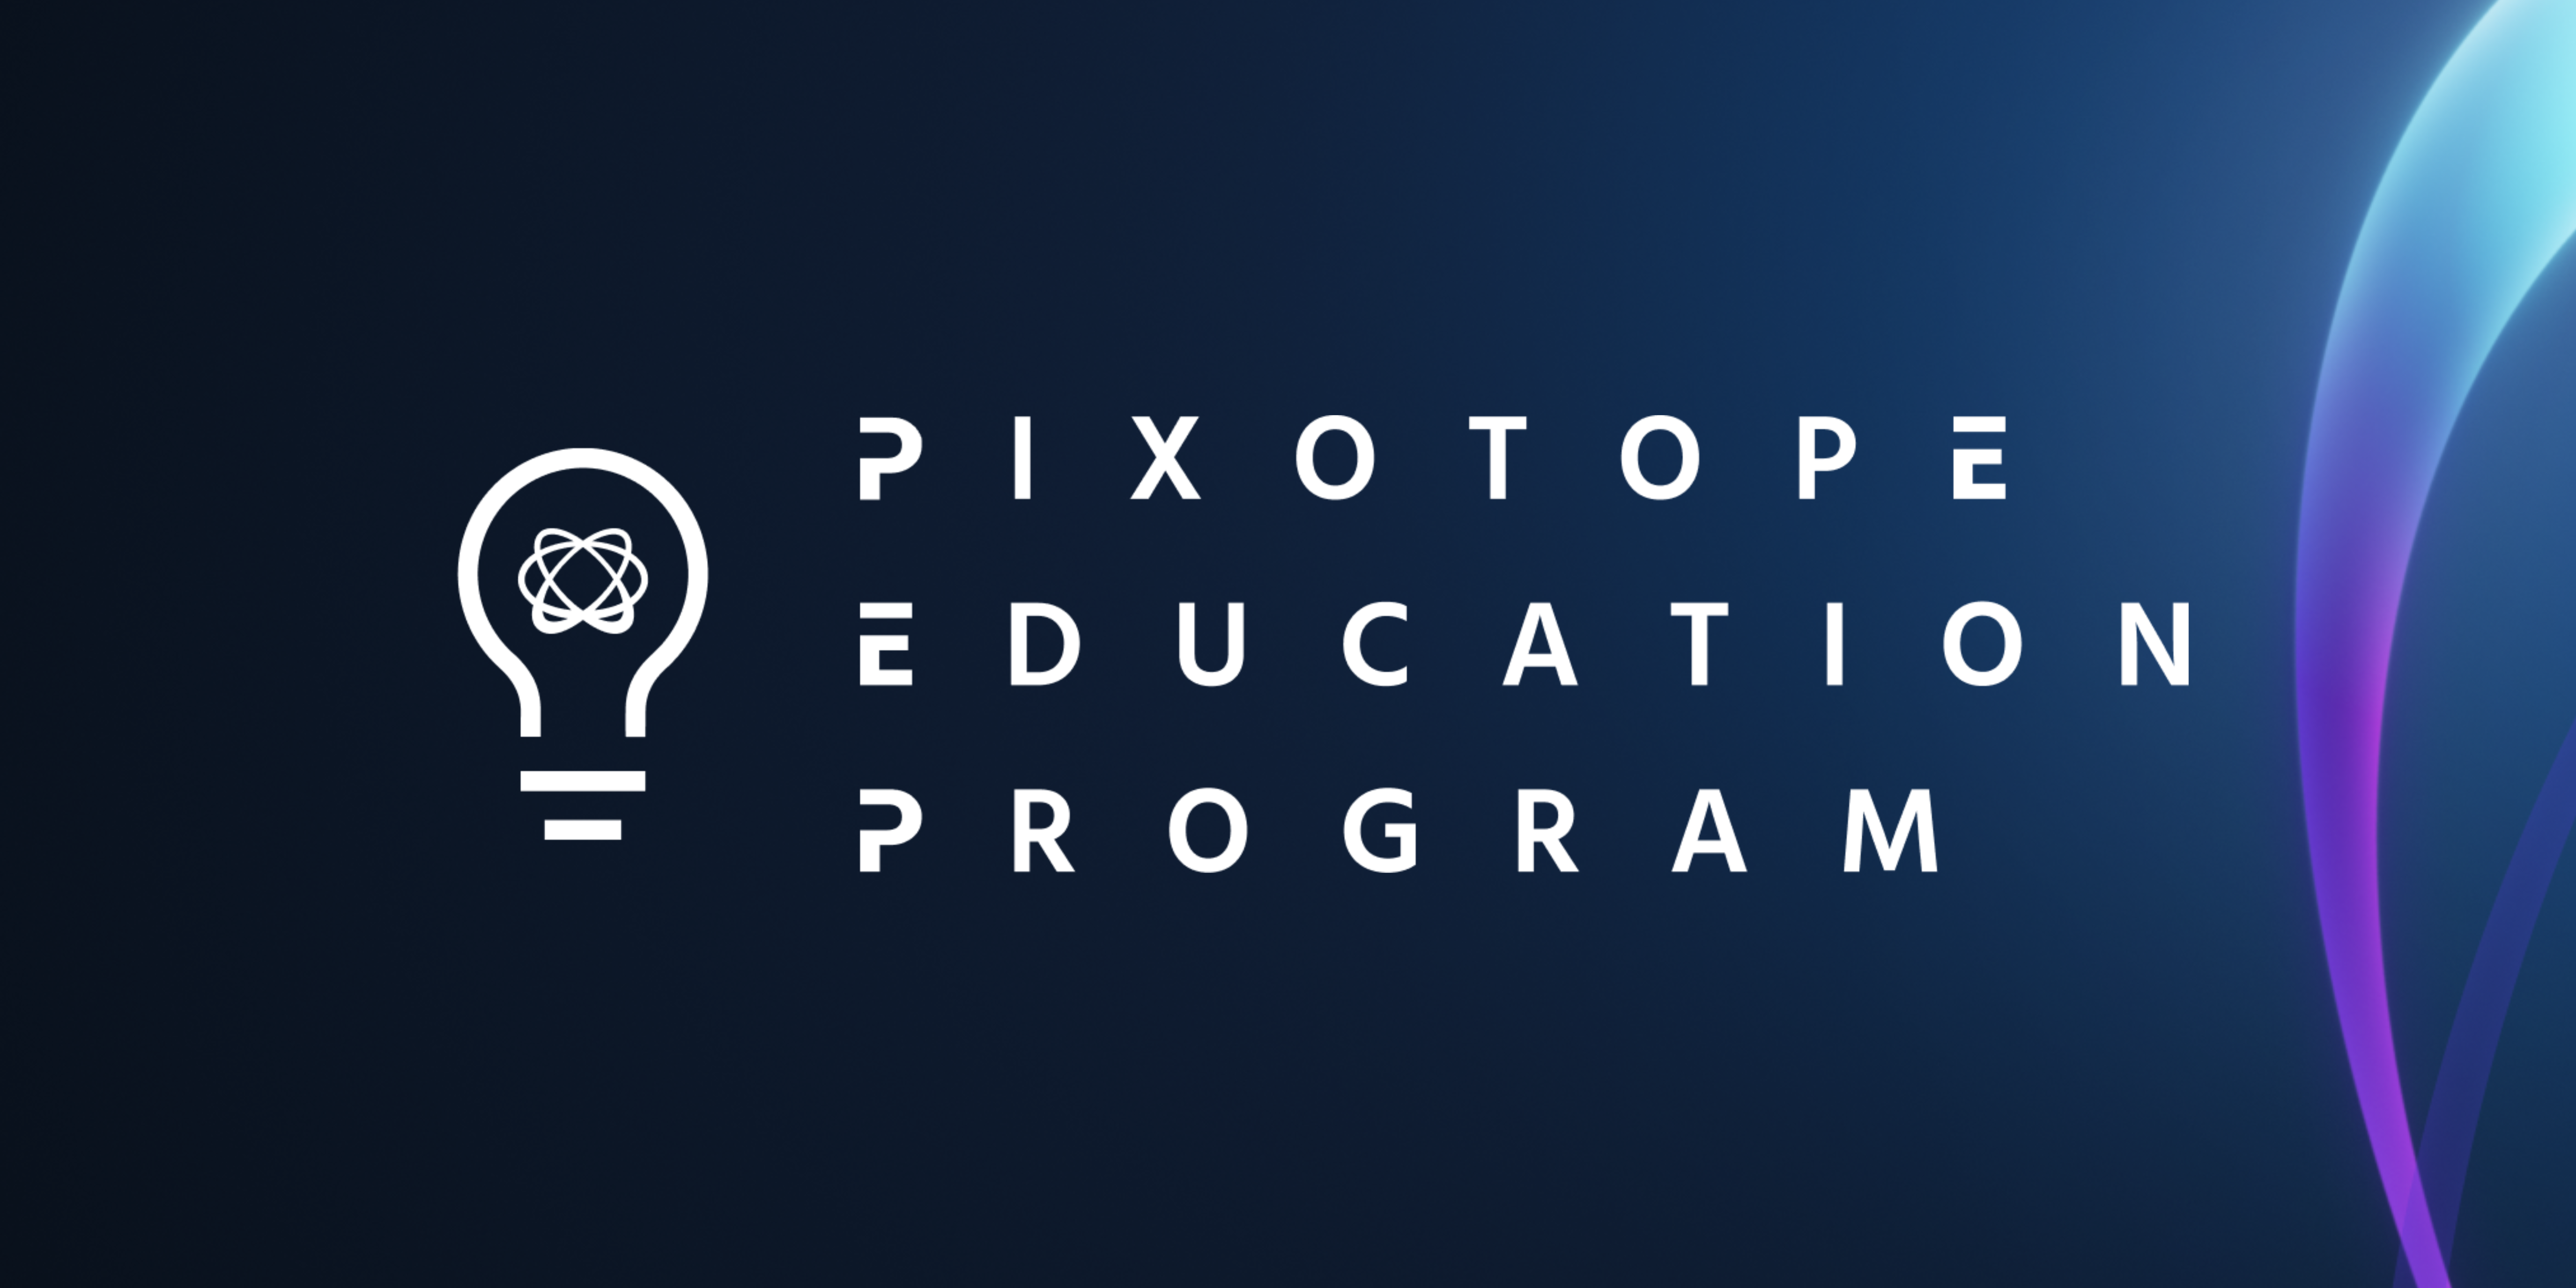 Official logo of Pixotope Education Program for universities